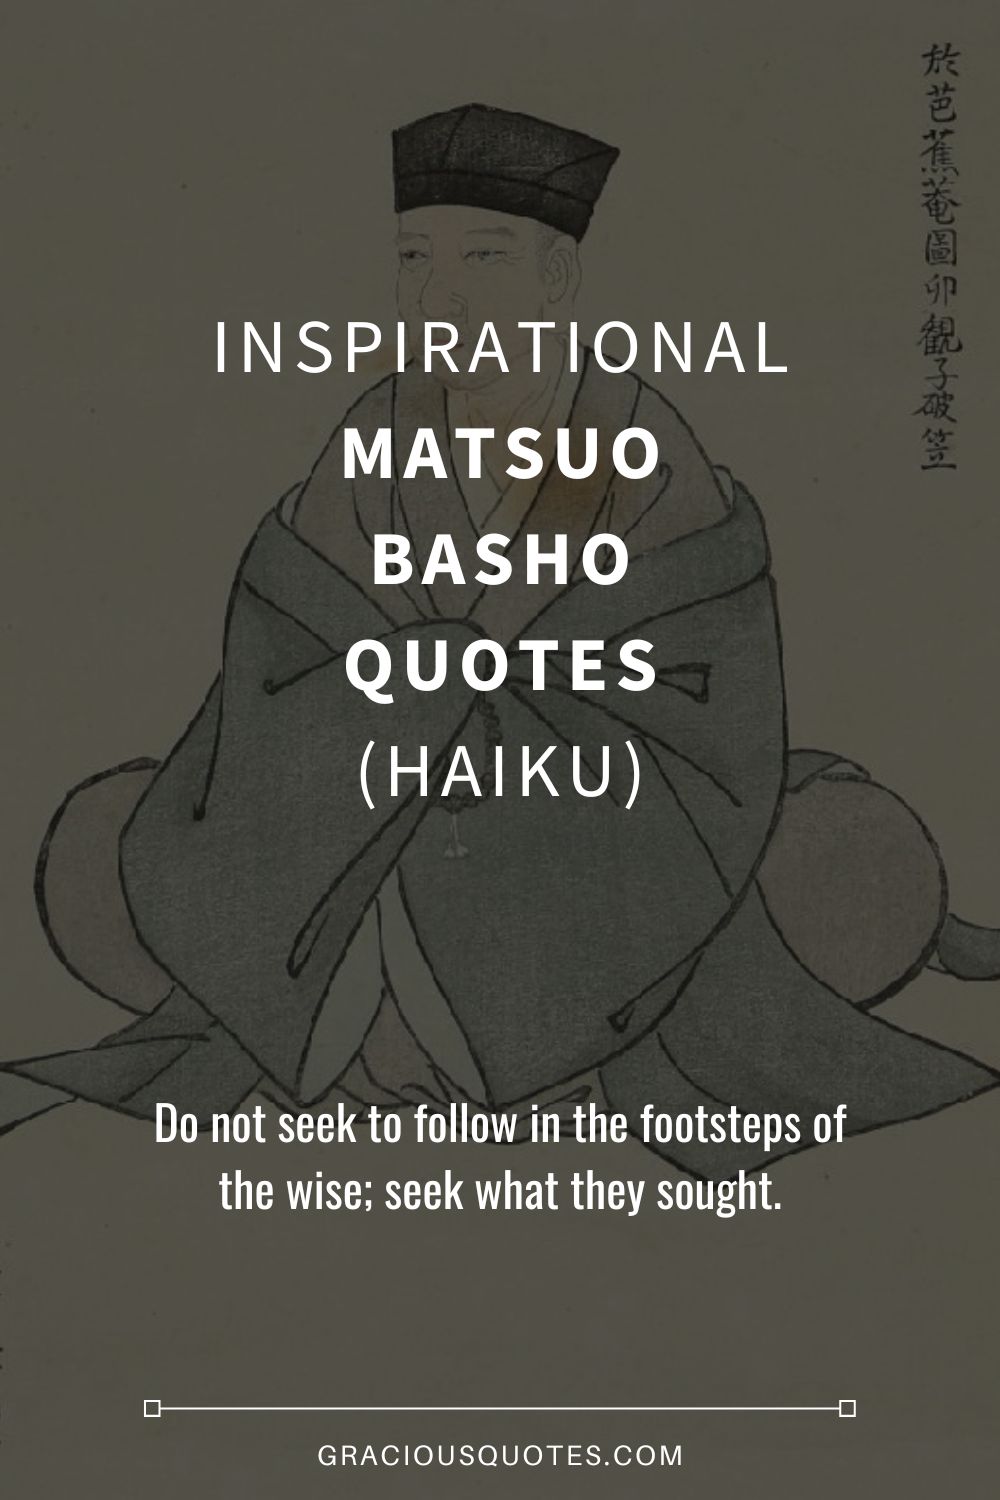 Inspirational Matsuo Basho Quotes (HAIKU) - Gracious Quotes